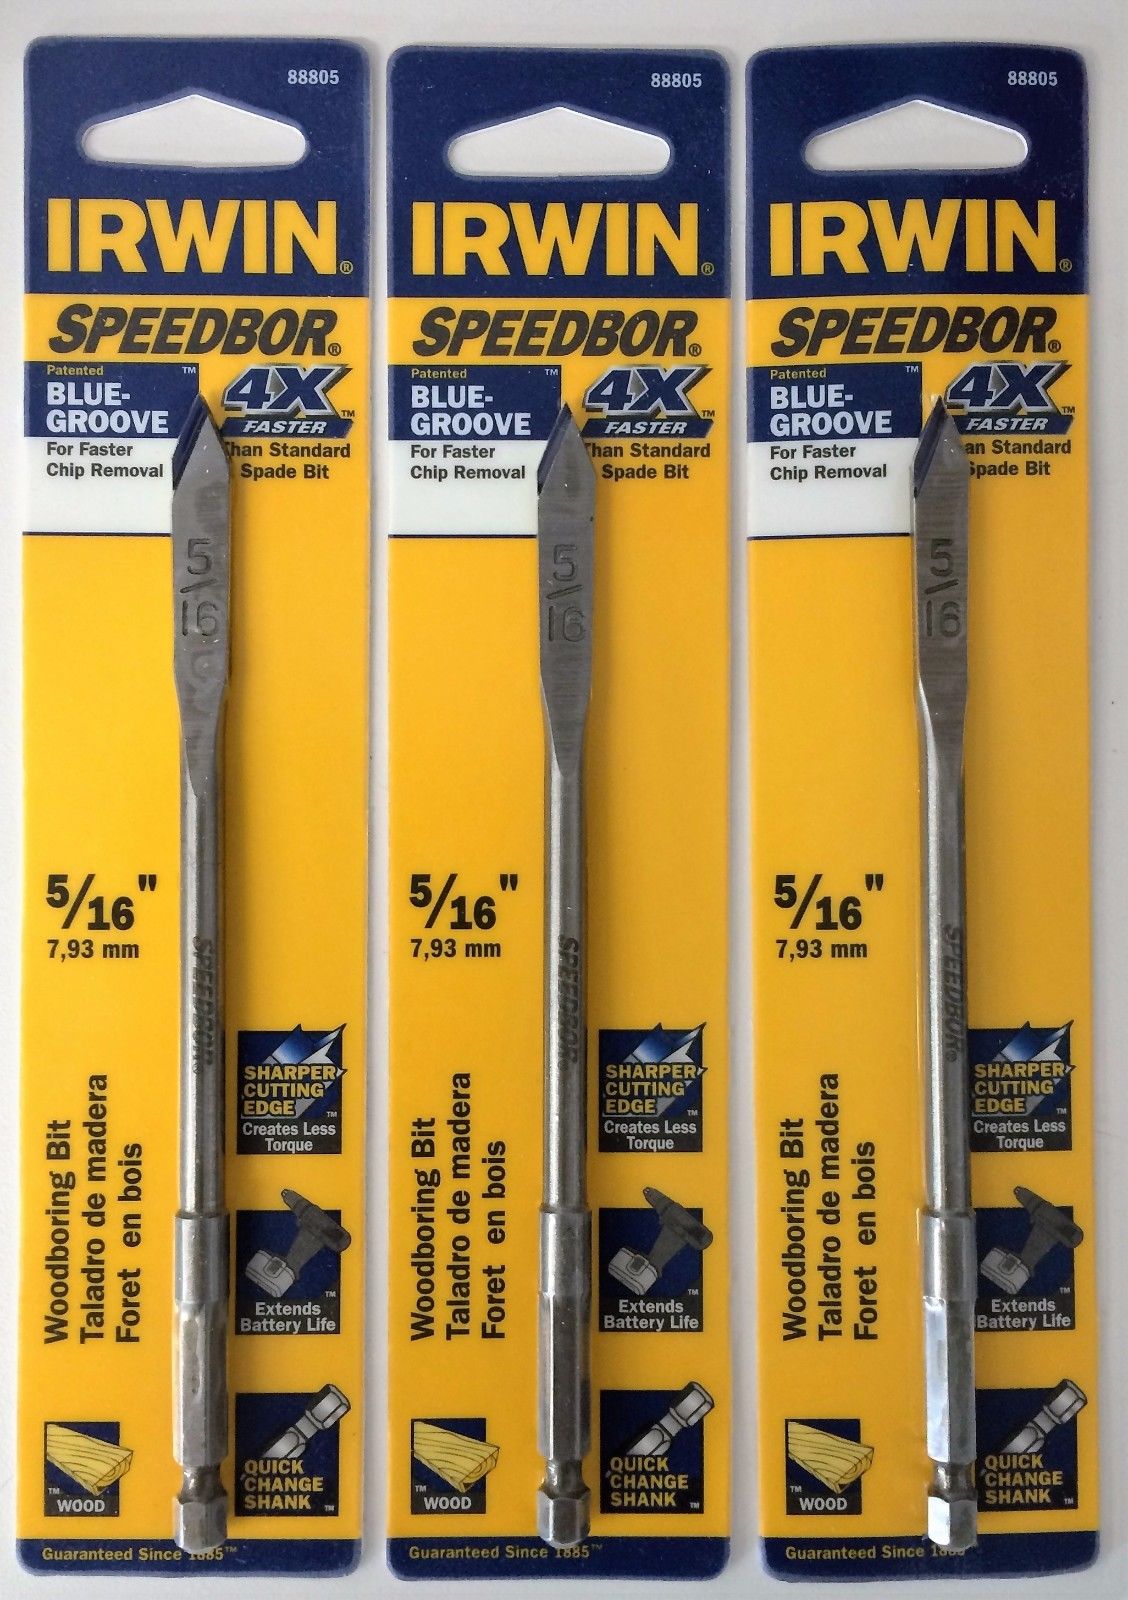 Irwin 88805 Speedbor Blue Groove Wood Boring Bit 5/16" x 6" 3 Packs